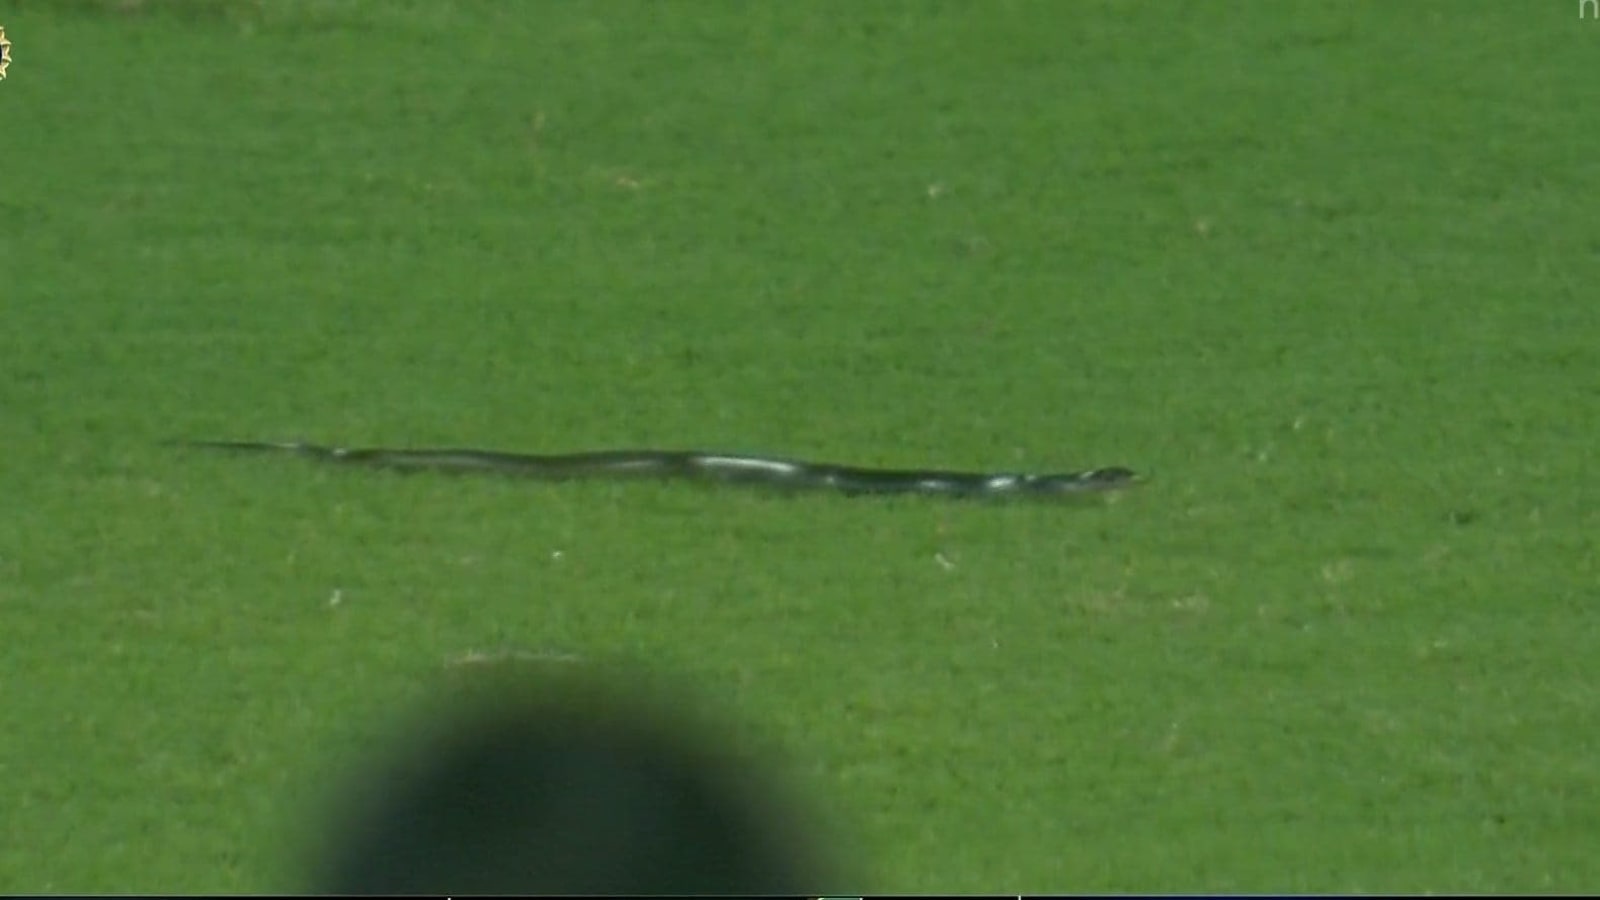 Snake halts play during Sri Lanka cricket match